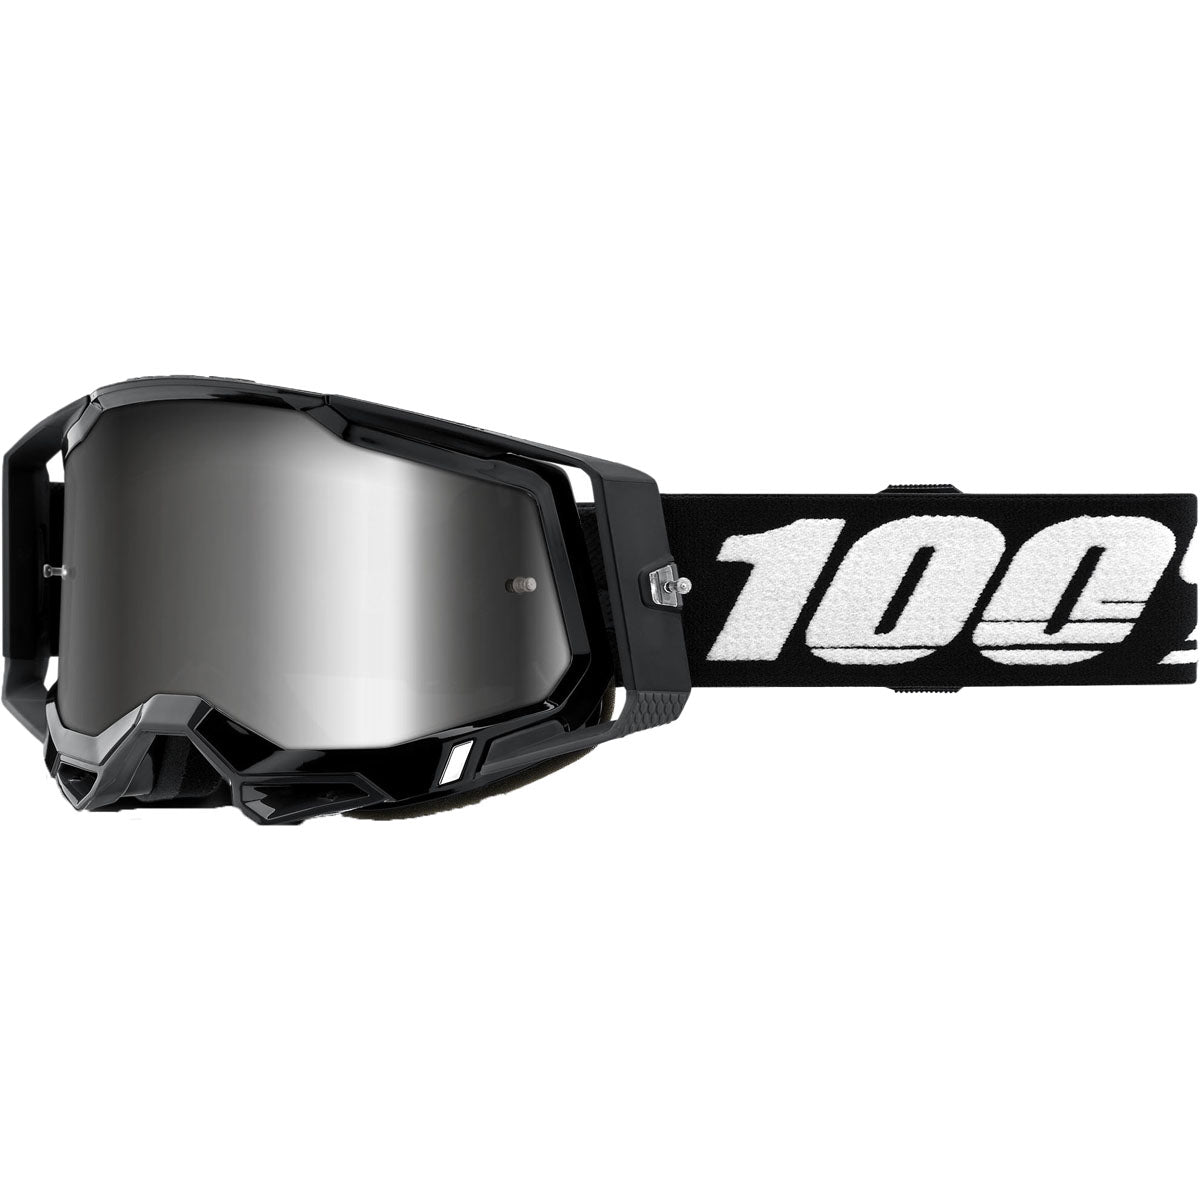 100% Racecraft 2 Goggles Black / Mirror Silver Lens